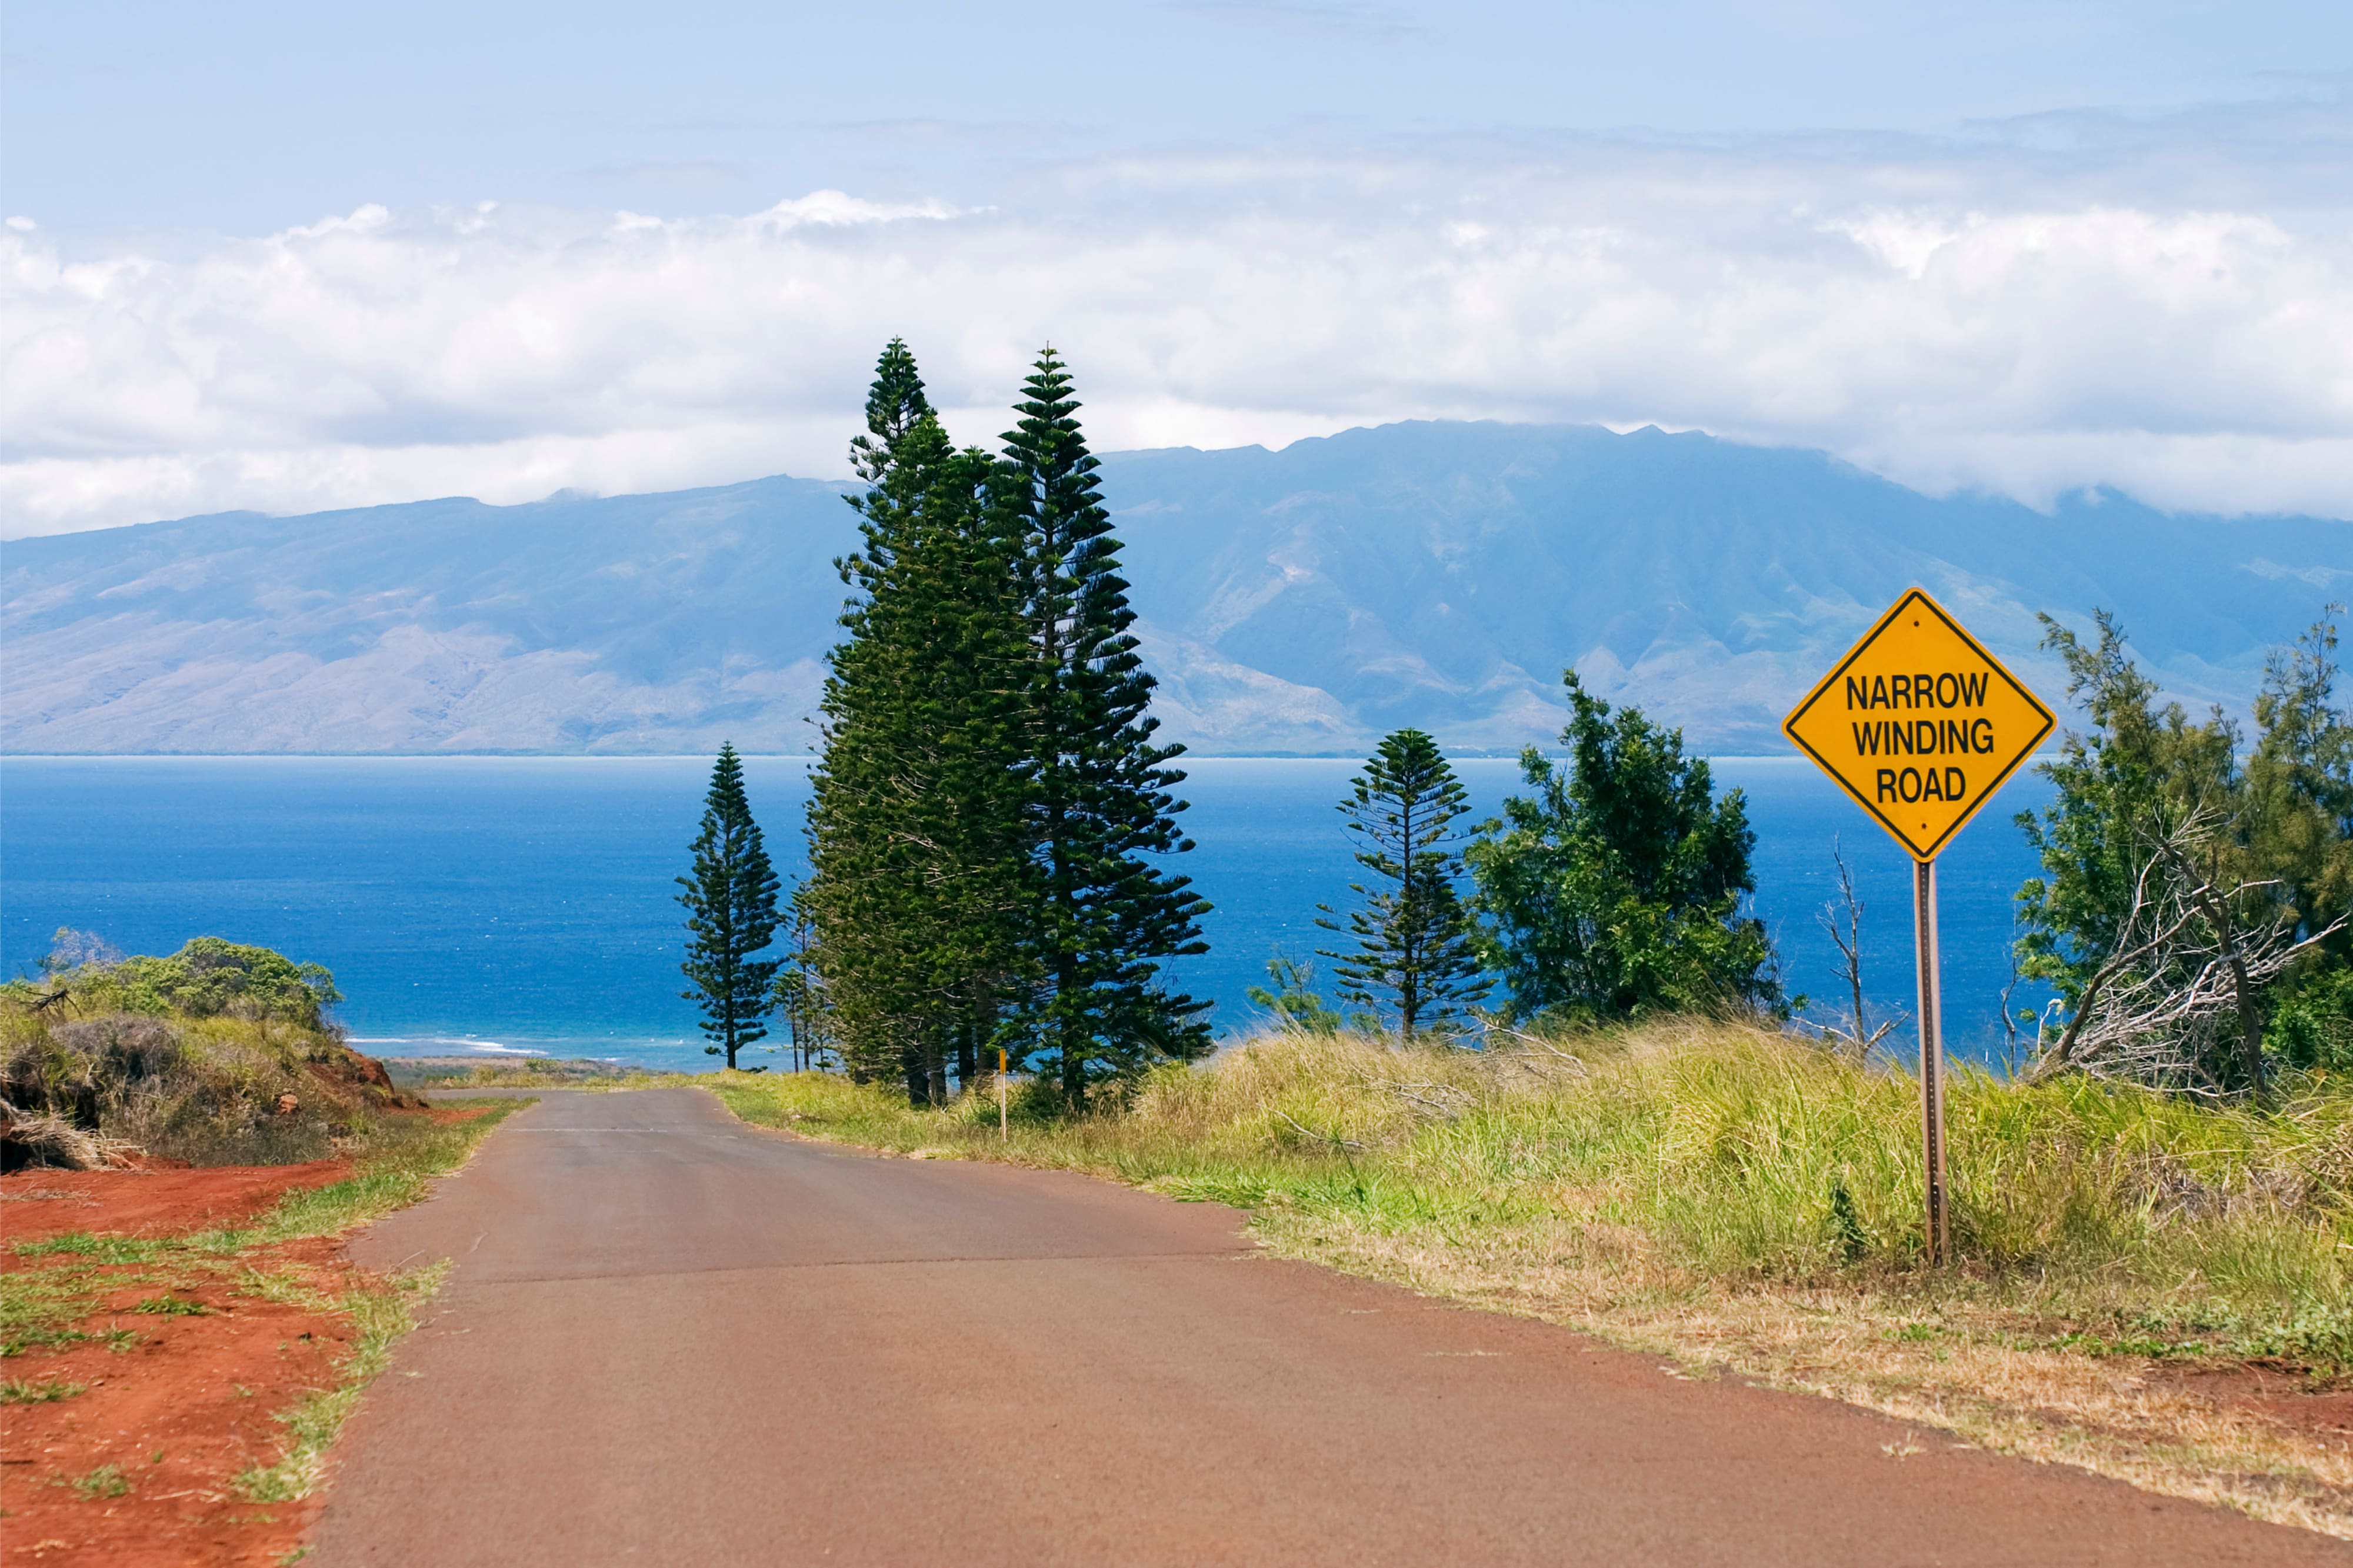 Narrow winding road on Lanai, Hawaii